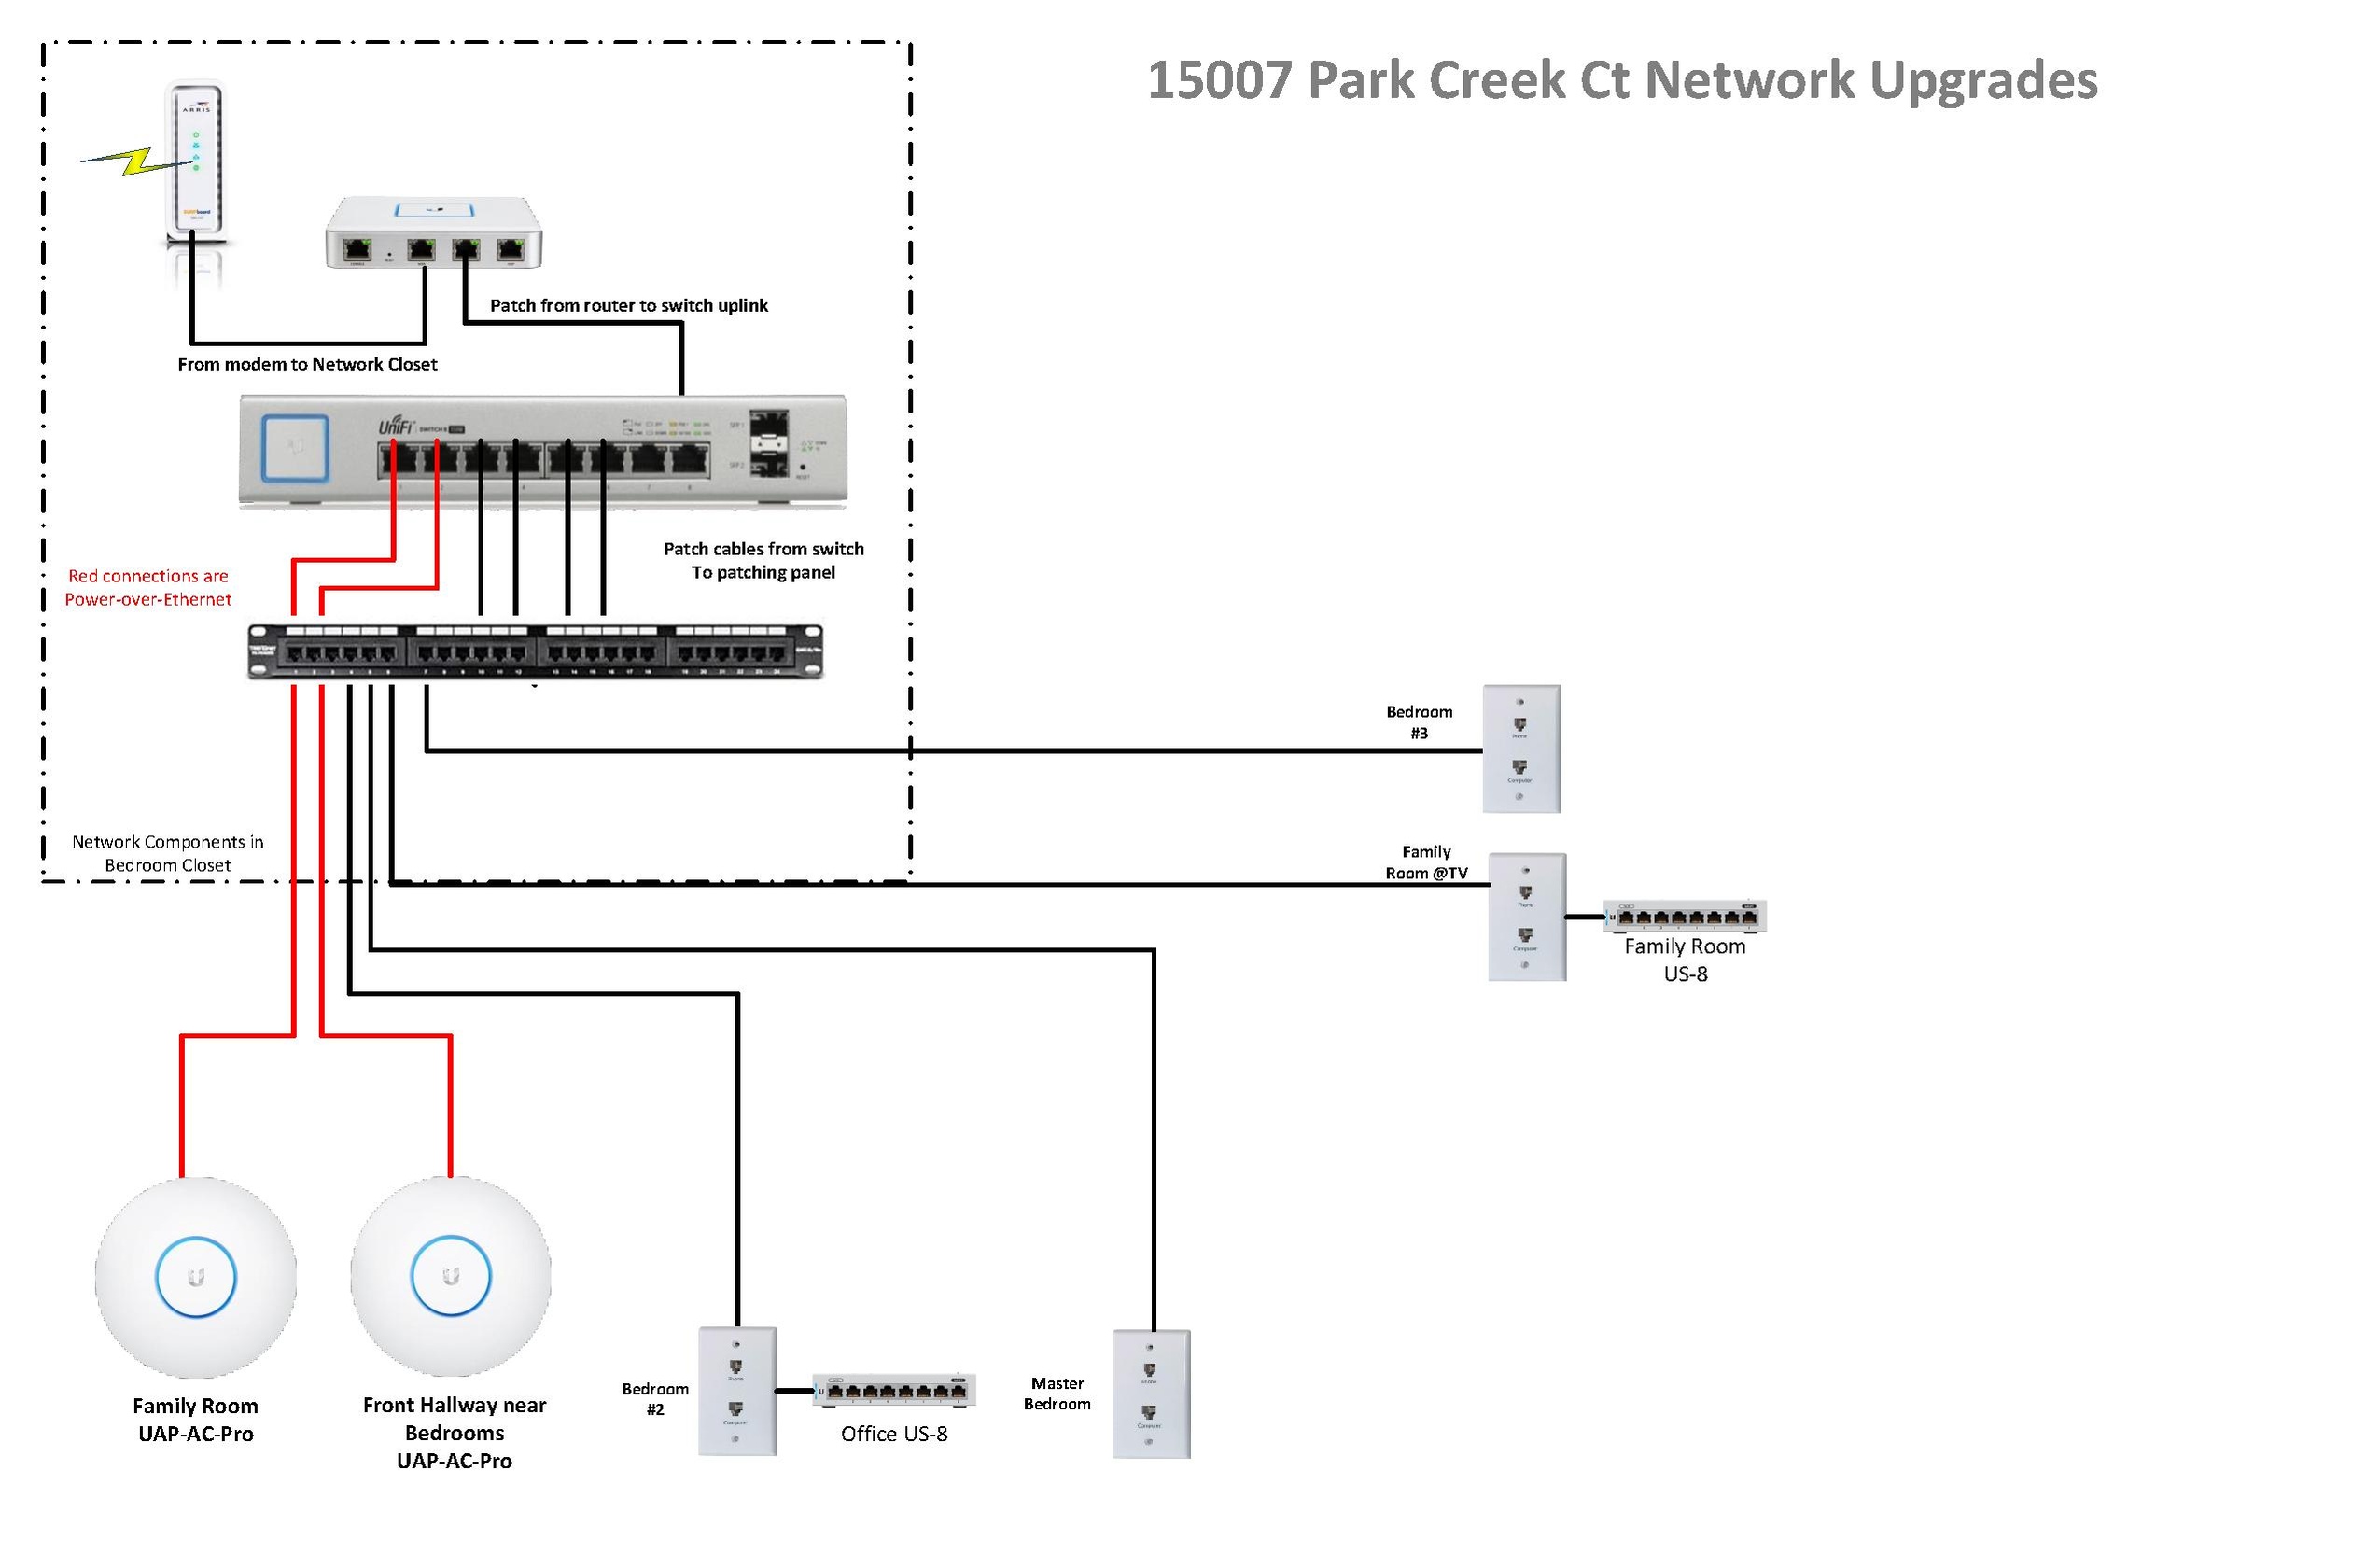 Park Creek Ct Network Upgrades-current.pdf